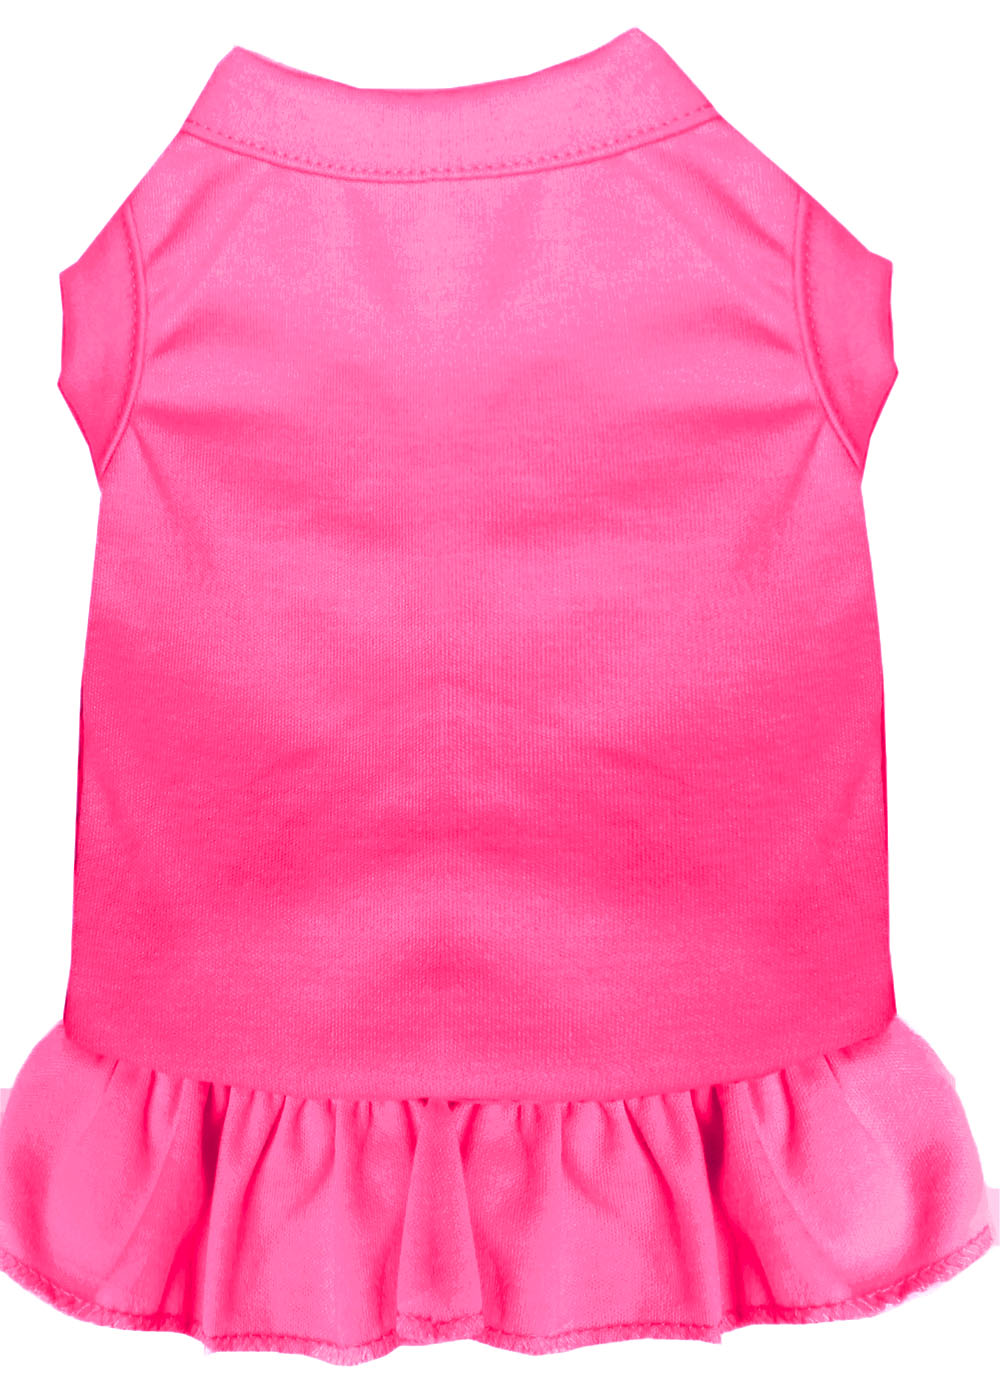 Plain Pet Dress Bright Pink XS